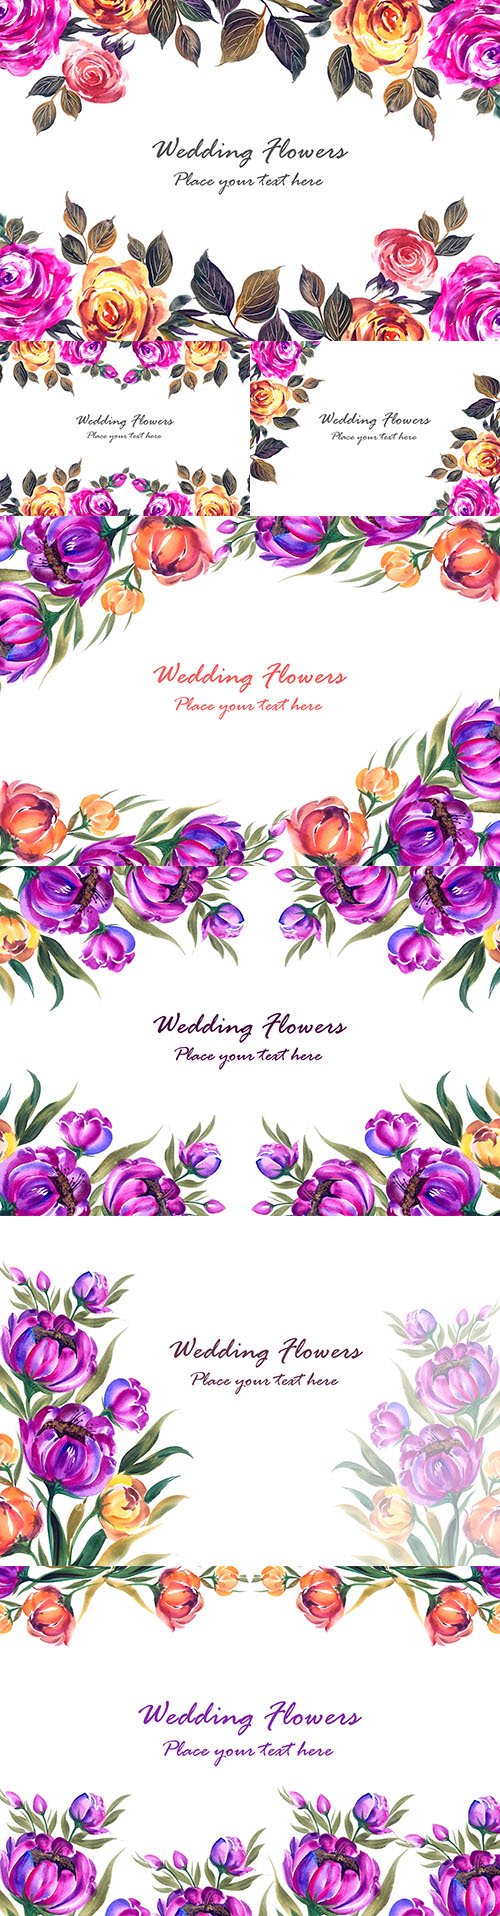 Wedding invitations floral watercolor decorative 12